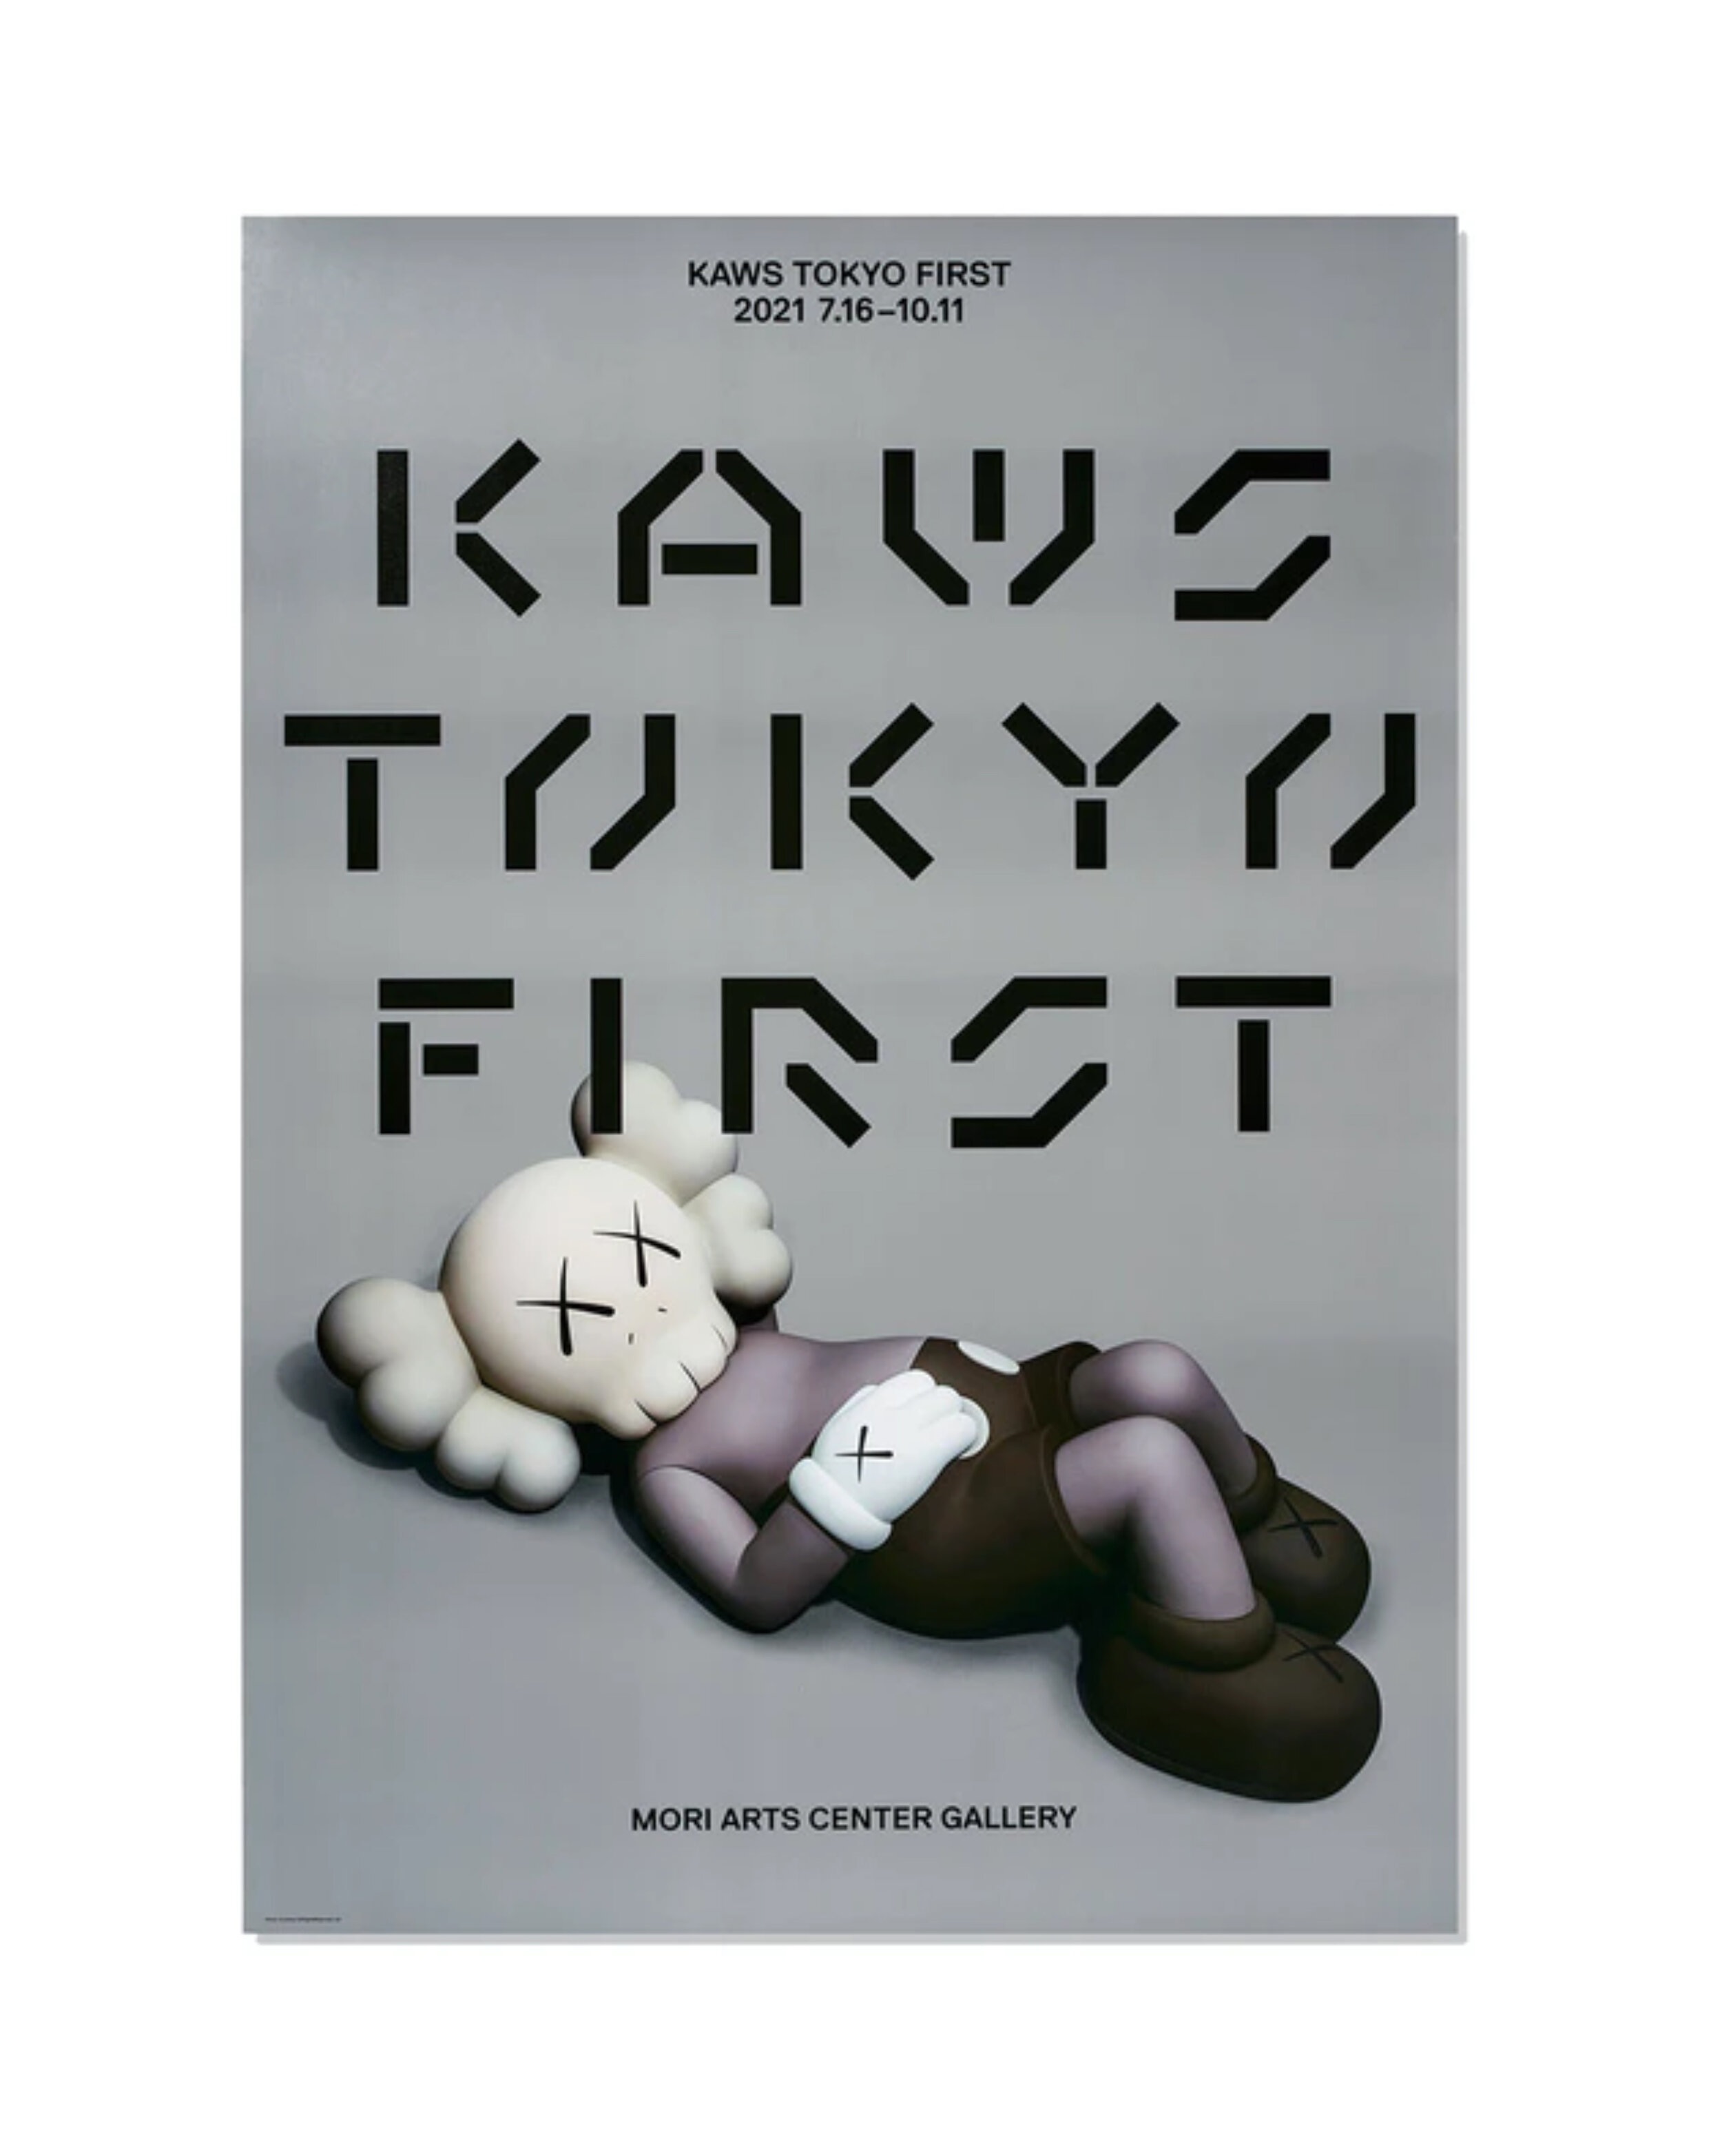 KAWS TOKYO FIRST パズル 1000ピースpuzzle - dsgroupco.com